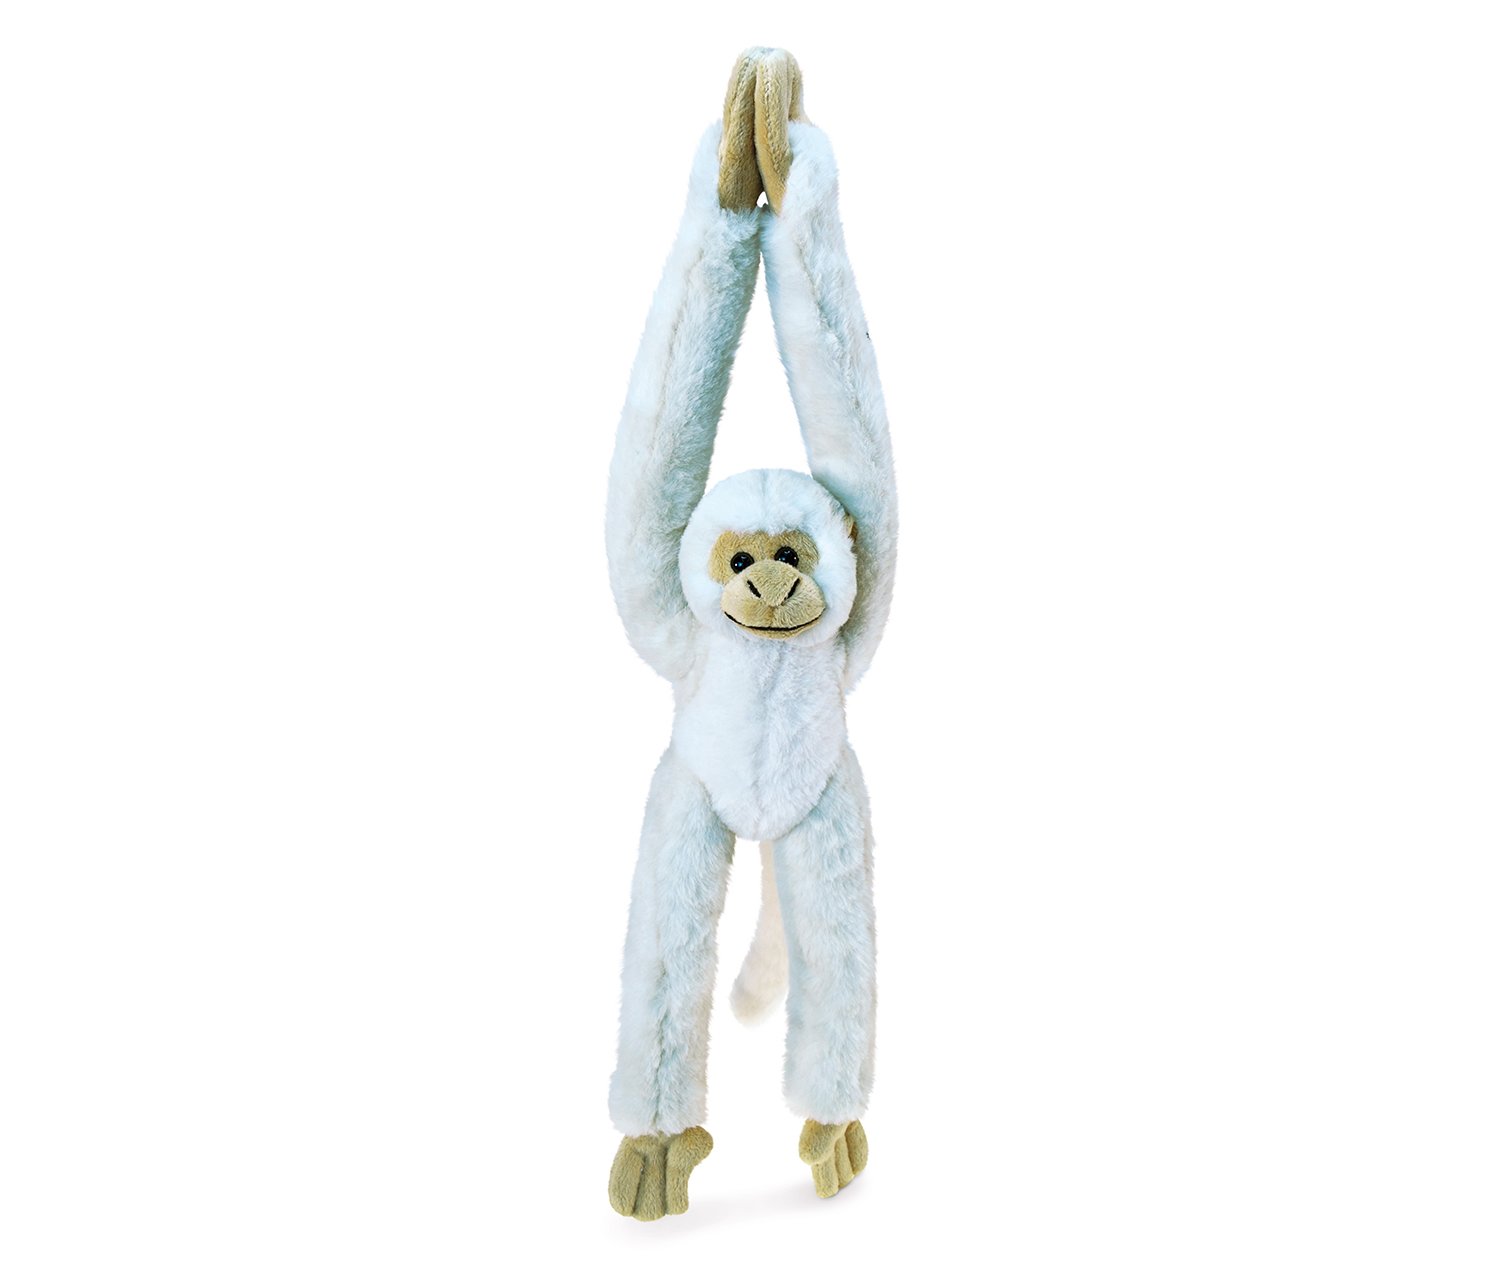 hanging monkey teddy